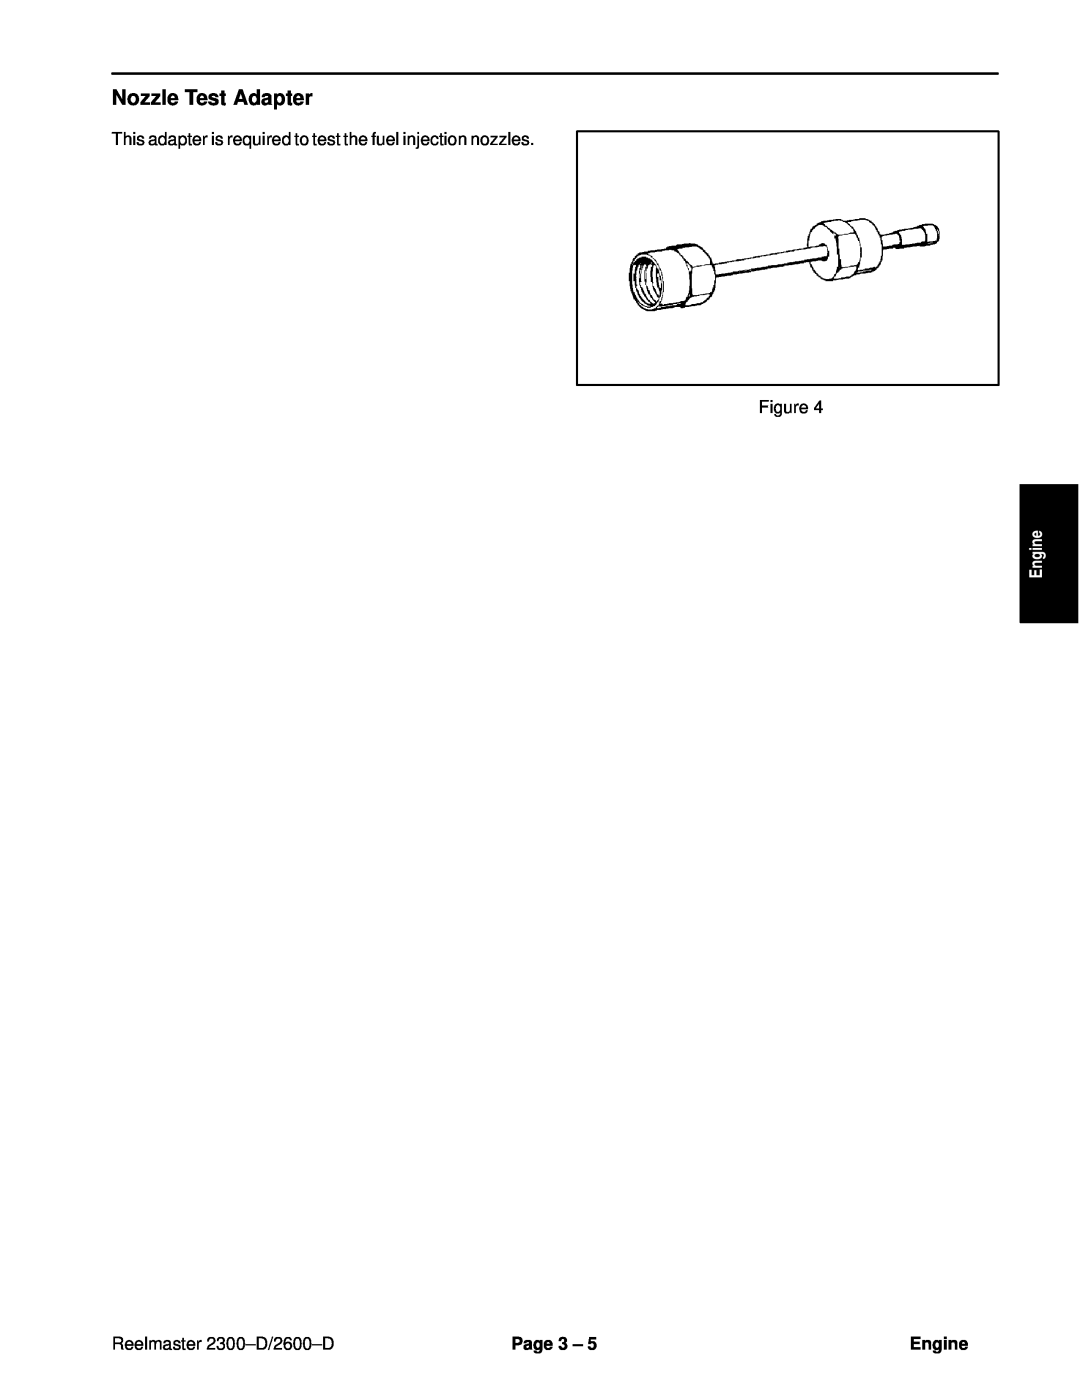 Toro 2600D, 2300-D service manual Nozzle Test Adapter, Engine, Reelmaster 2300±D/2600±D, Page 3 ± 